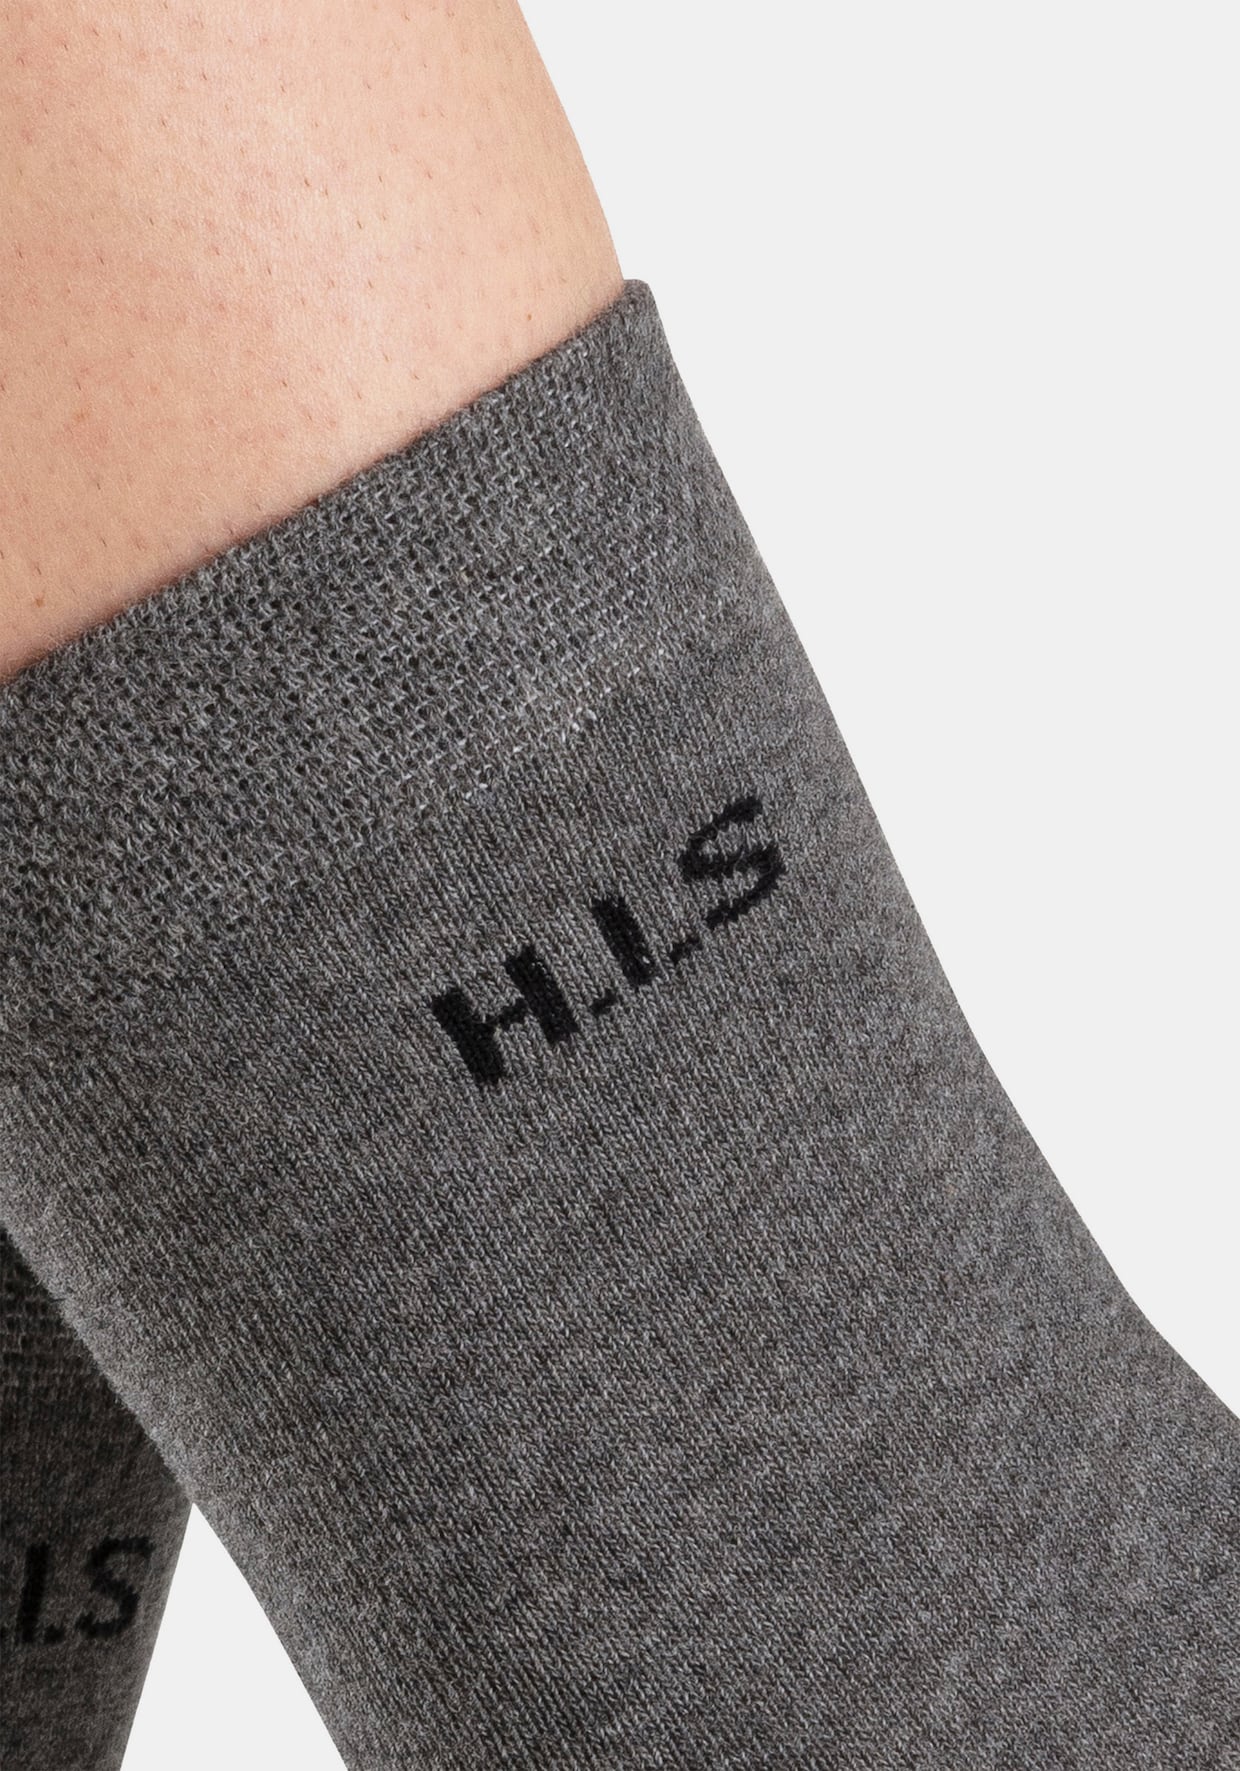 H.I.S Socken - grau, jeans, beige, grau